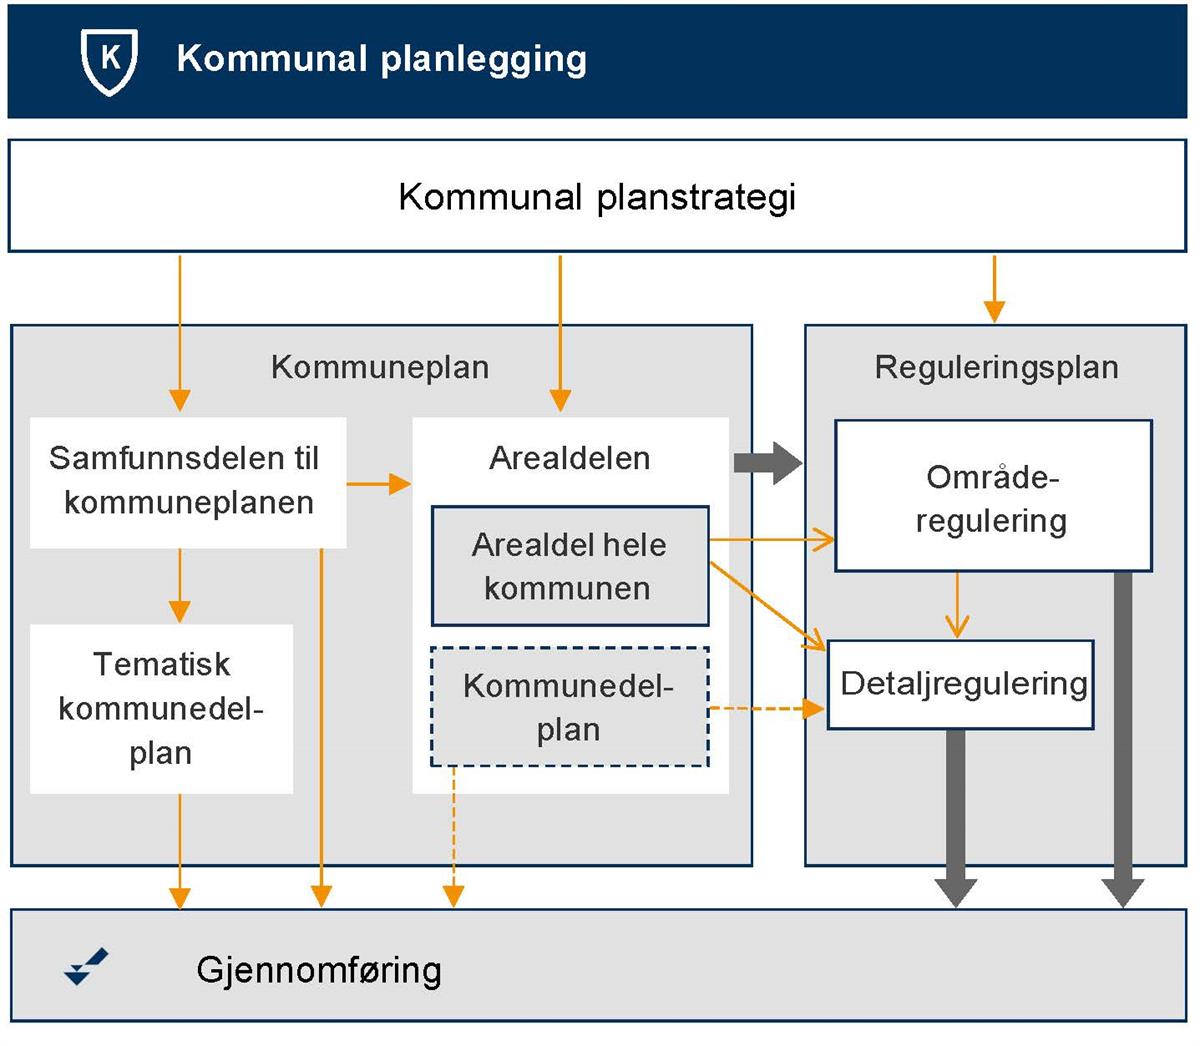 Reguleringsplan i det kommunale plansystemet